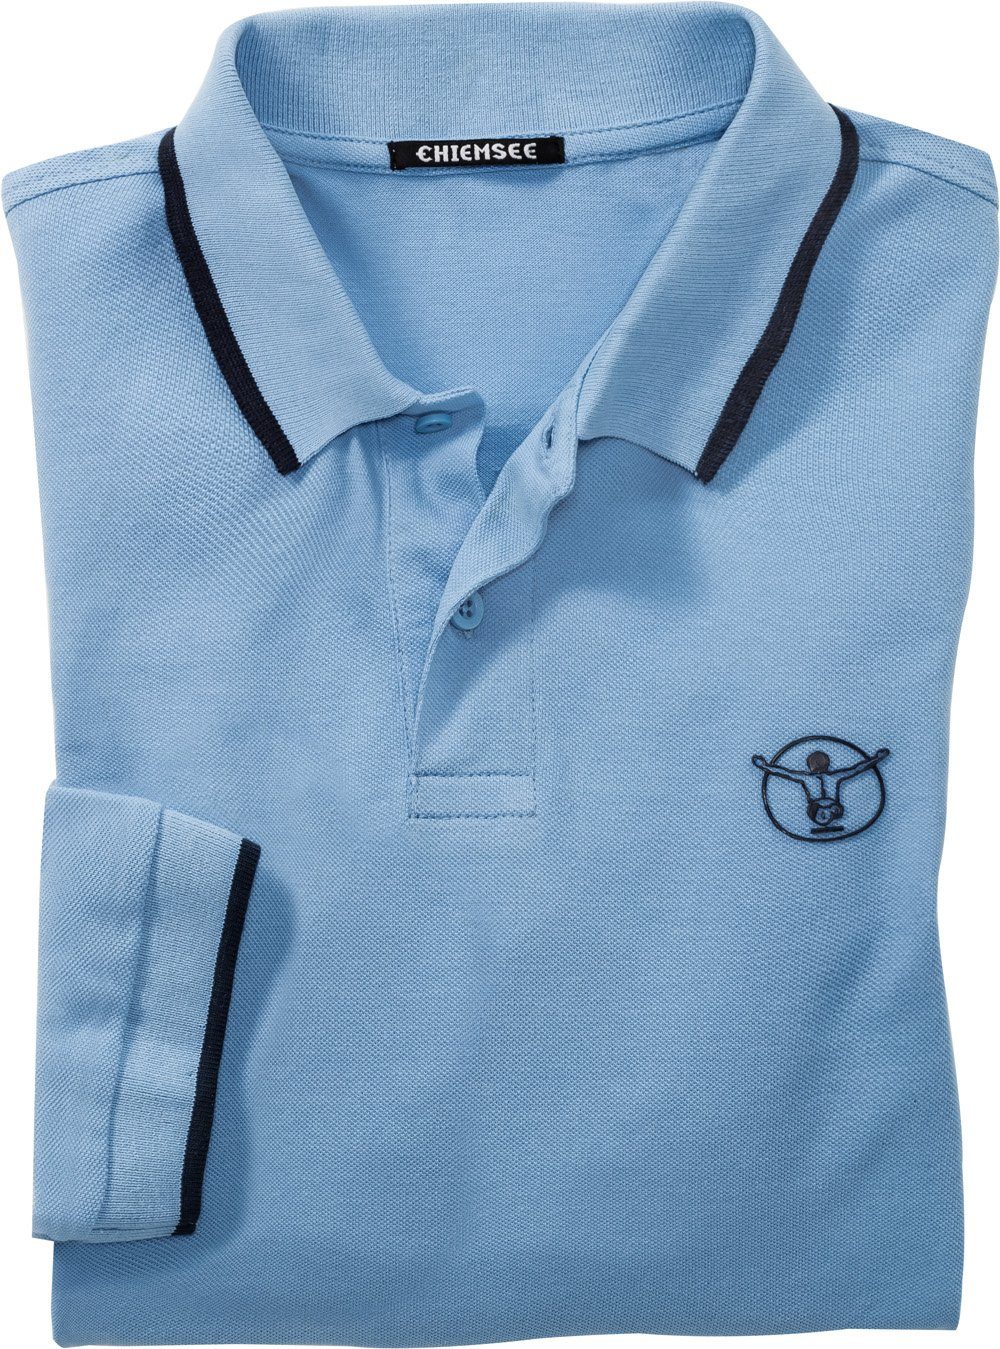 Chiemsee Langarm-Poloshirt Baumwoll-Piqué hellblau aus formstabilem